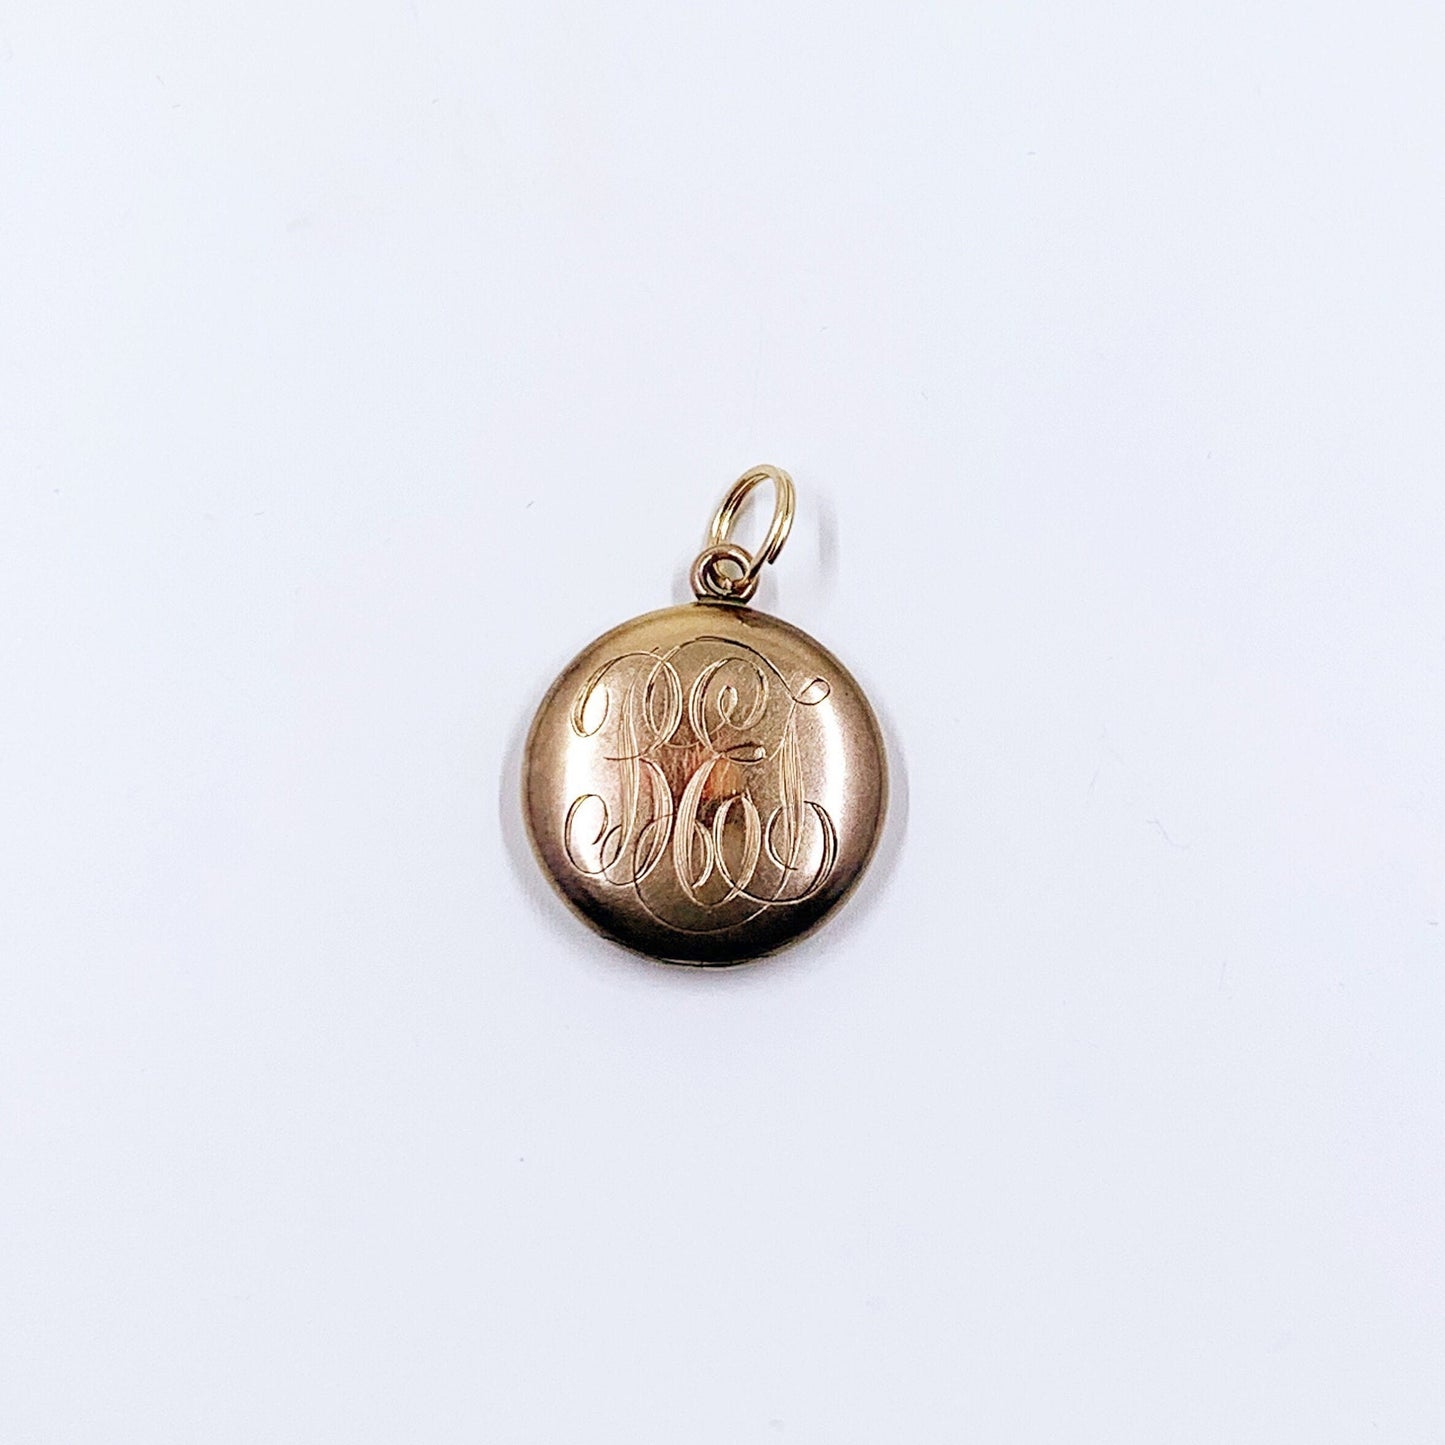 Antique Gold Filled Monogrammed Round Locket | BEJ Monogram | W & H Co. Locket